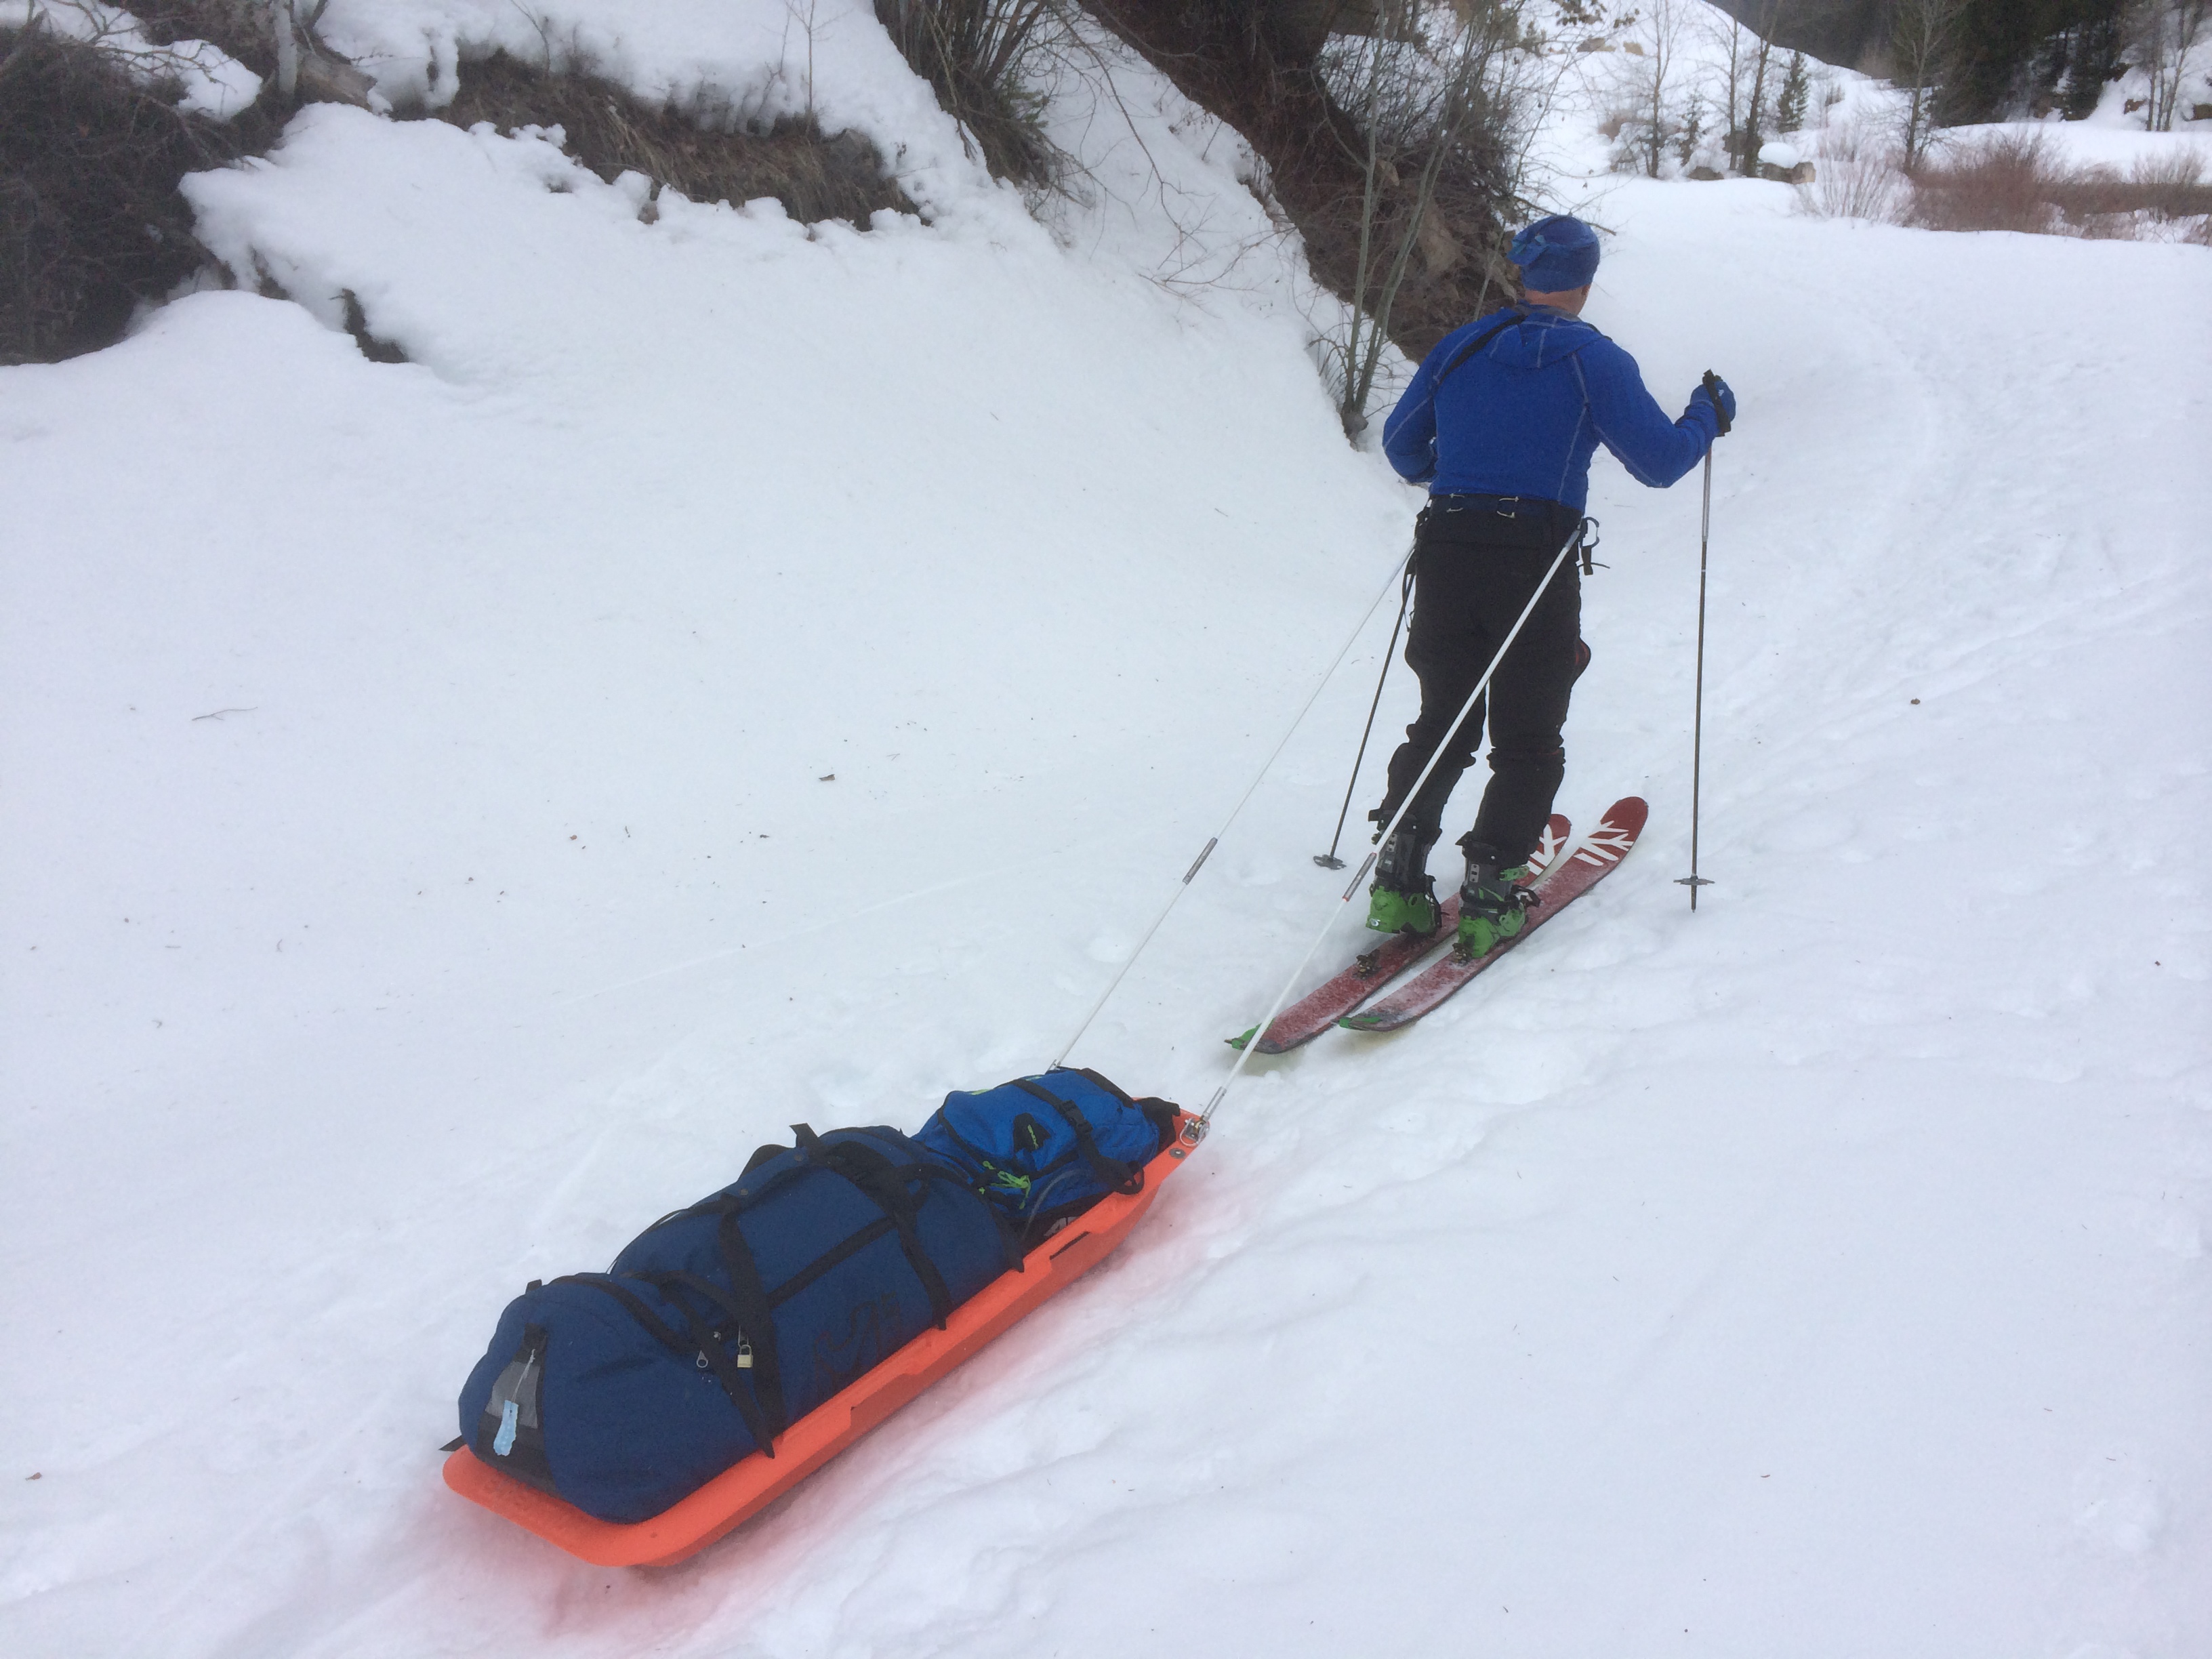 Ski Pulk sled, heavily loaded